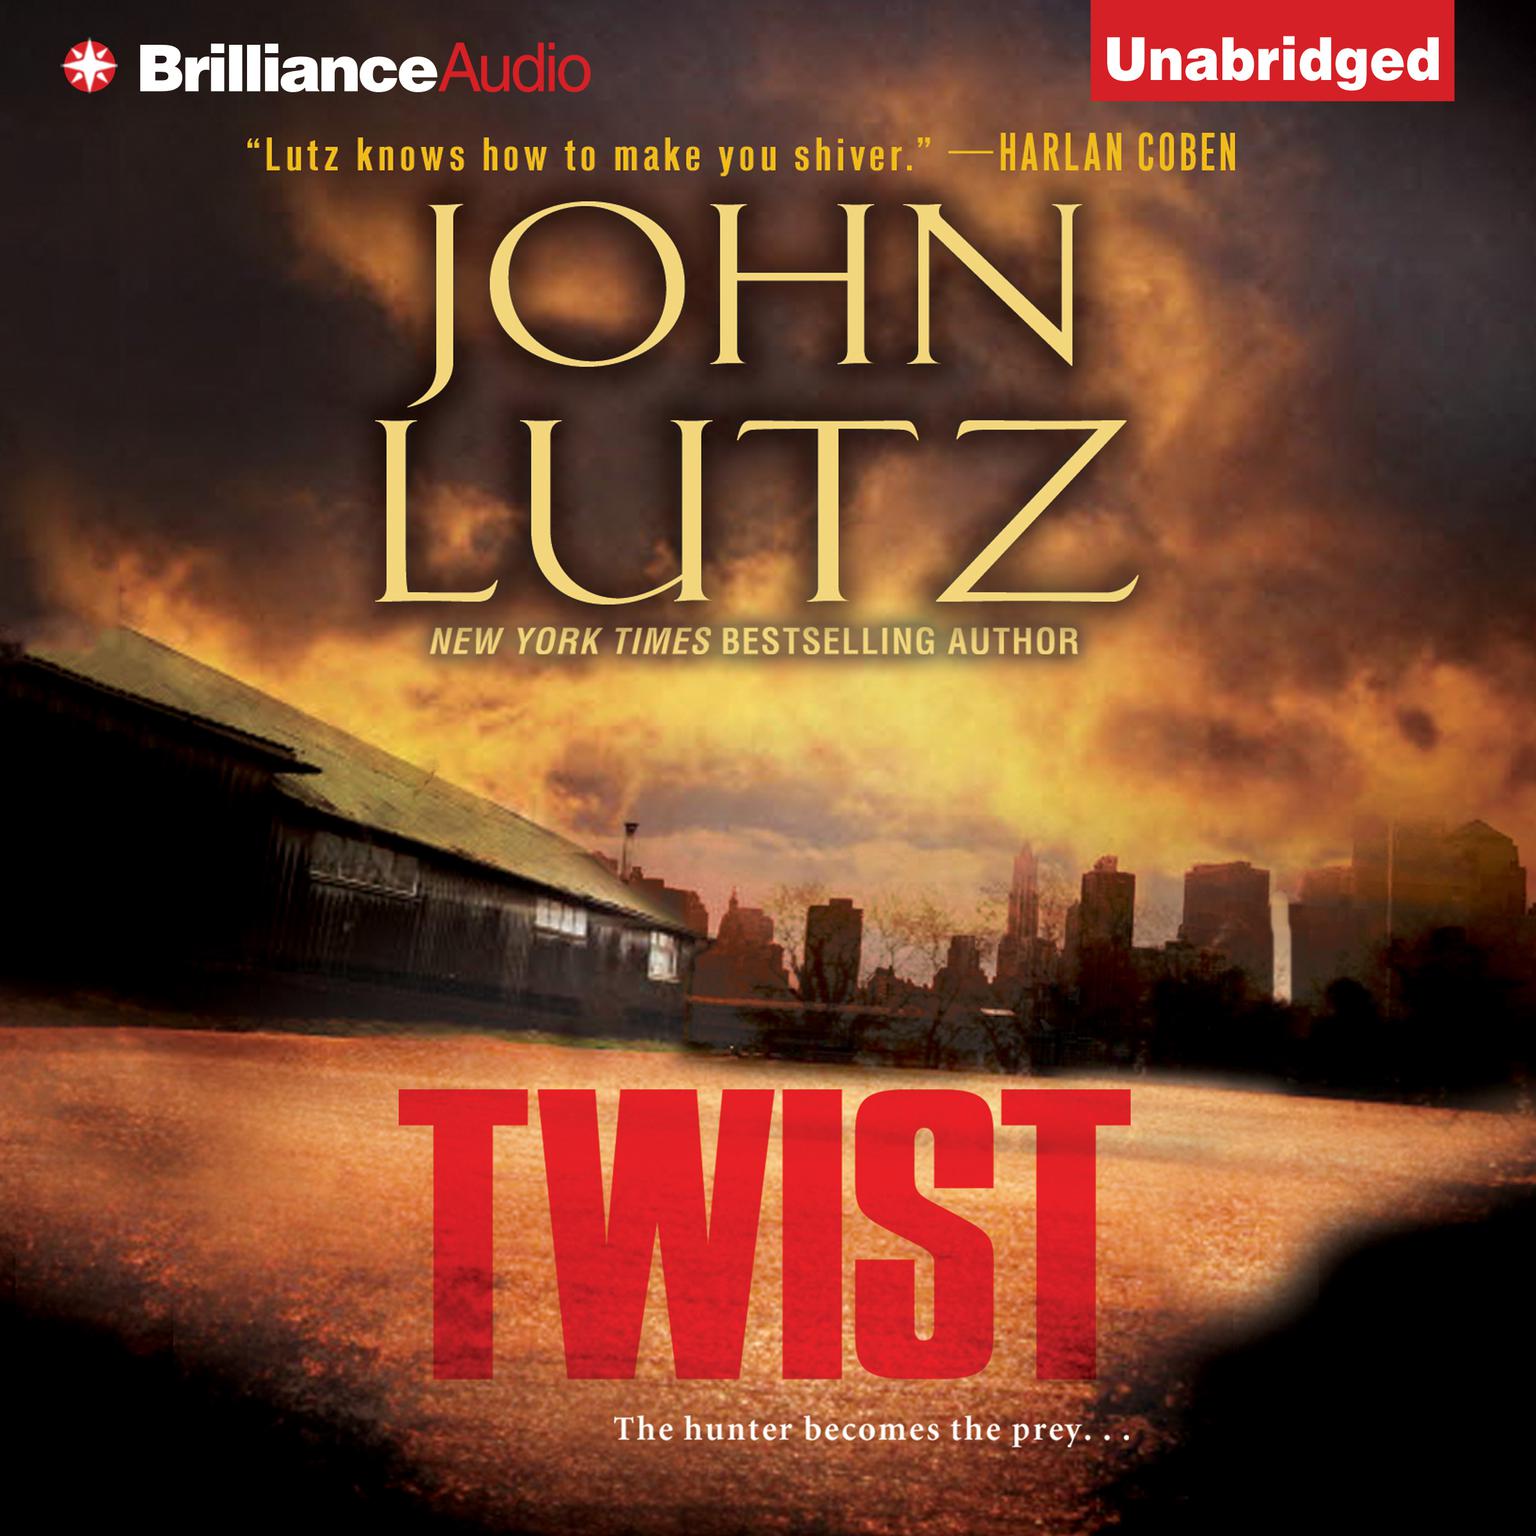 Twist Audiobook, by John Lutz